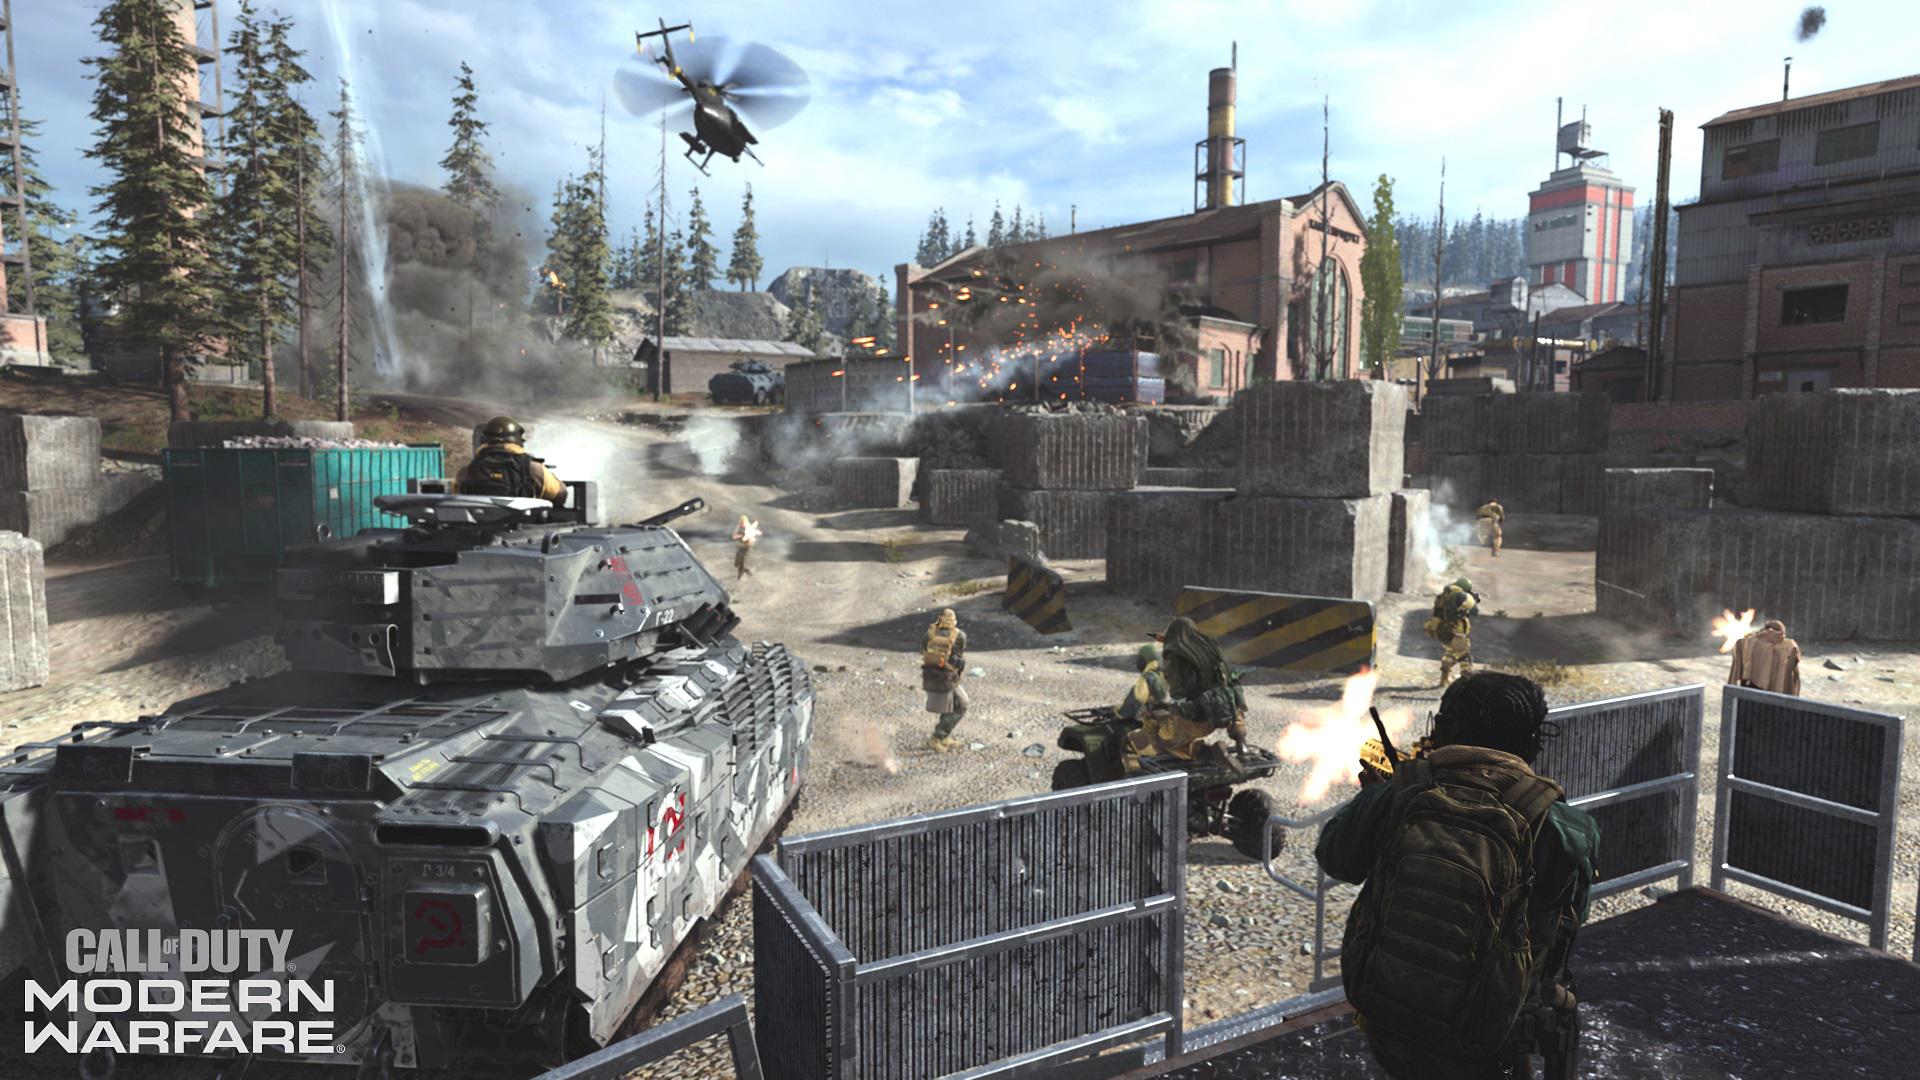 Call of Duty: Modern Warfare - PlayStation 4 - image 3 of 15